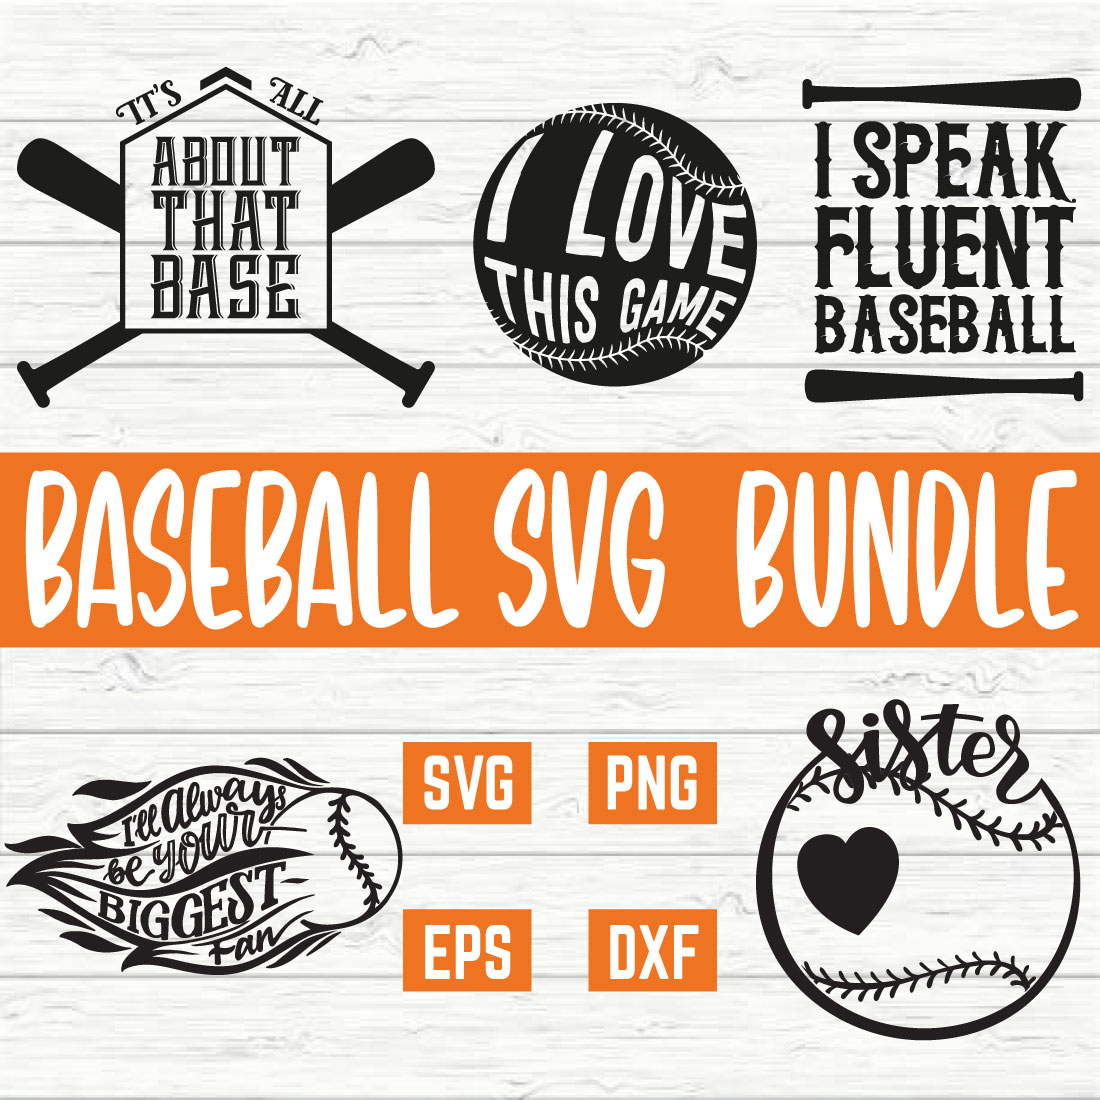 Baseball Typography Design Bundle vol 4 preview image.